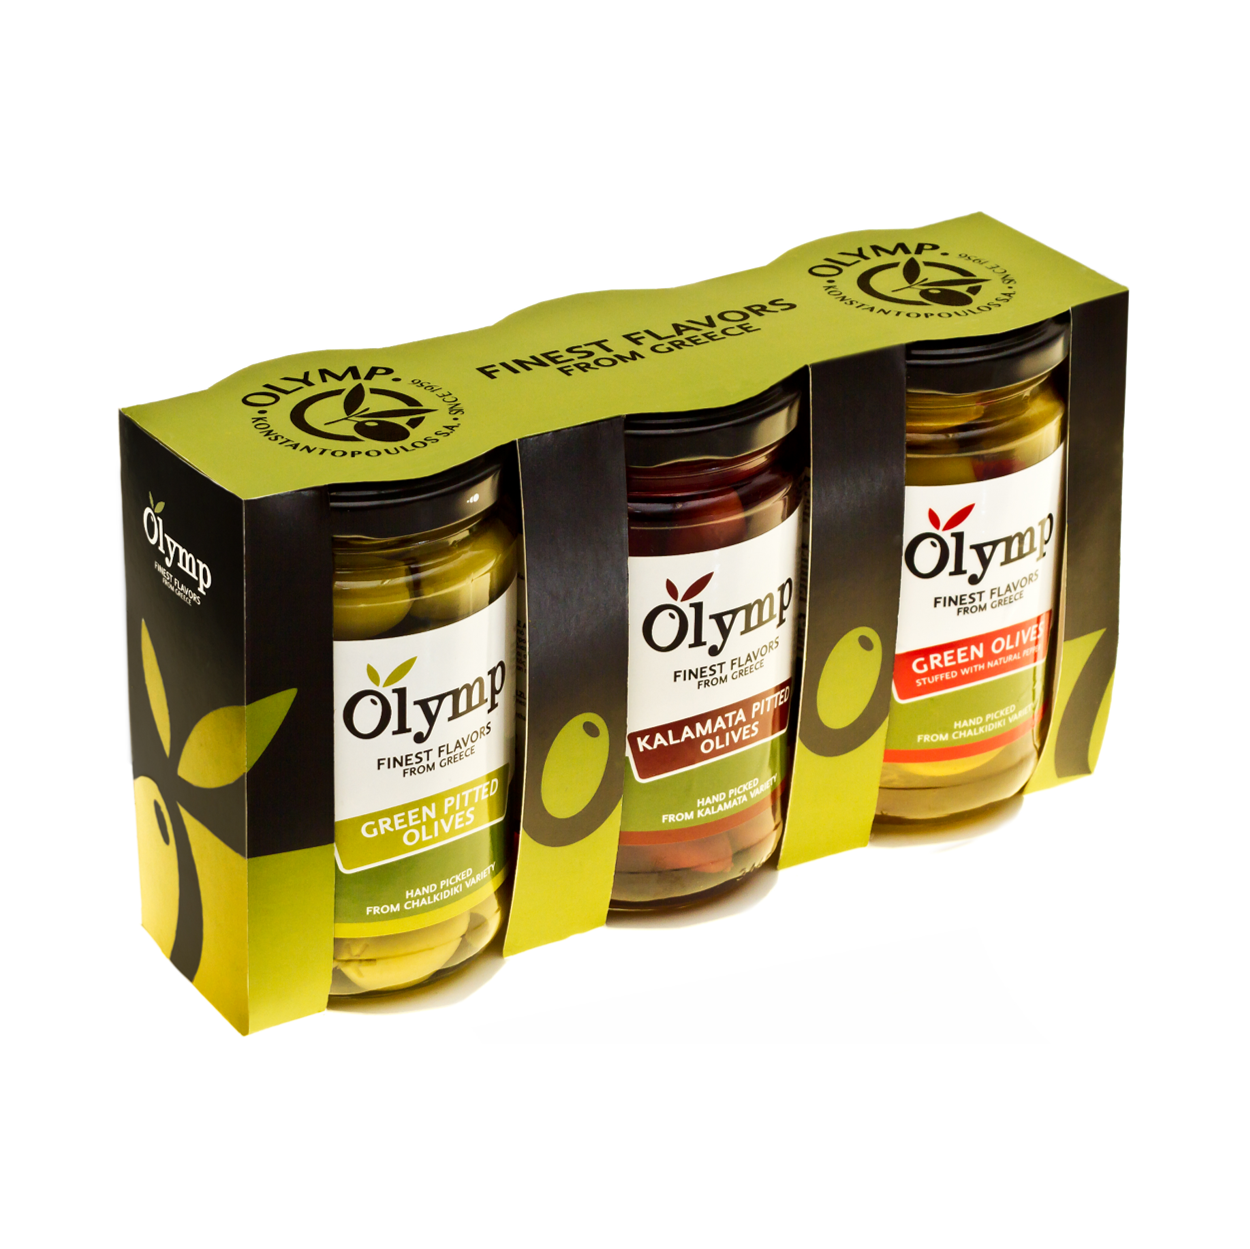 Olymp mix of Greek olives